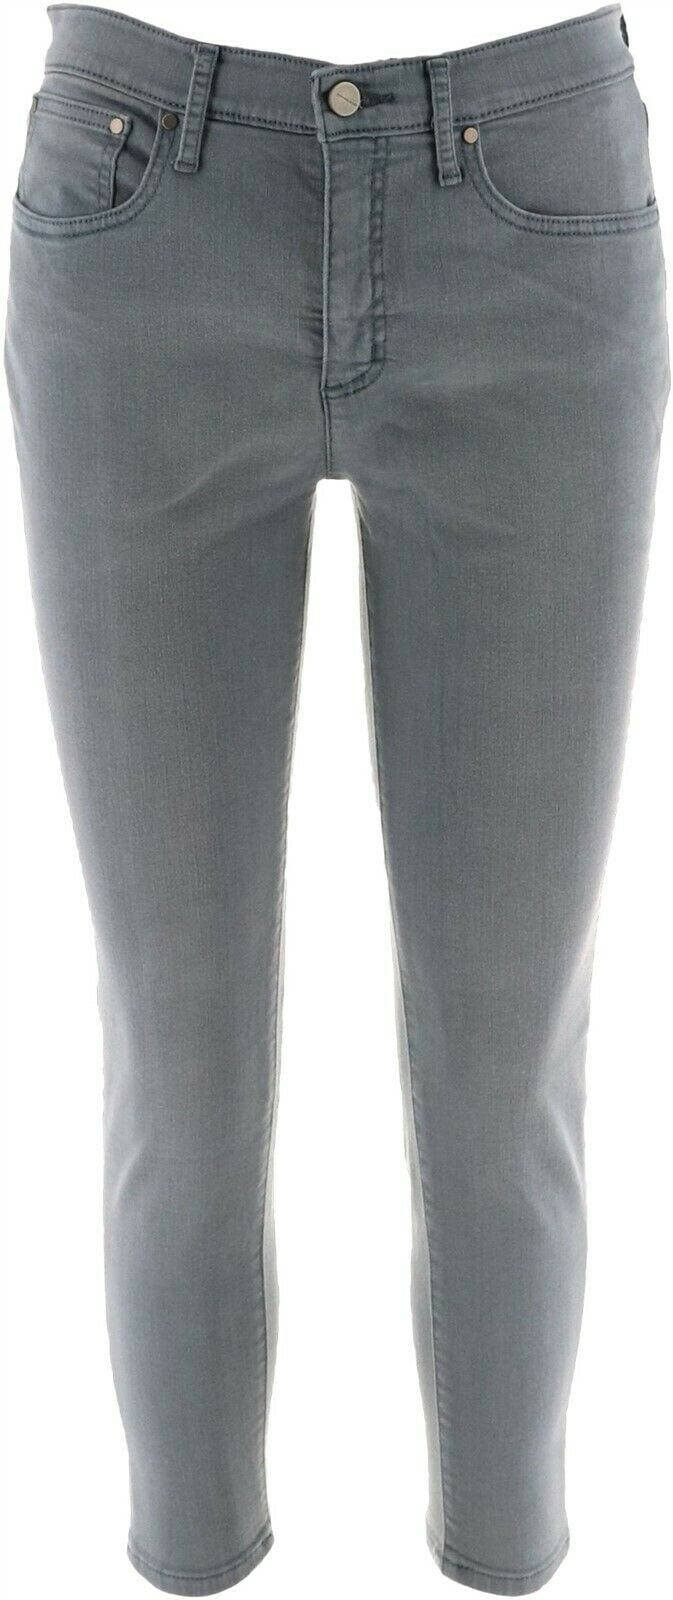 Halston Premier Denim Petite Ankle Skinny Jeans Women's A302021 ...